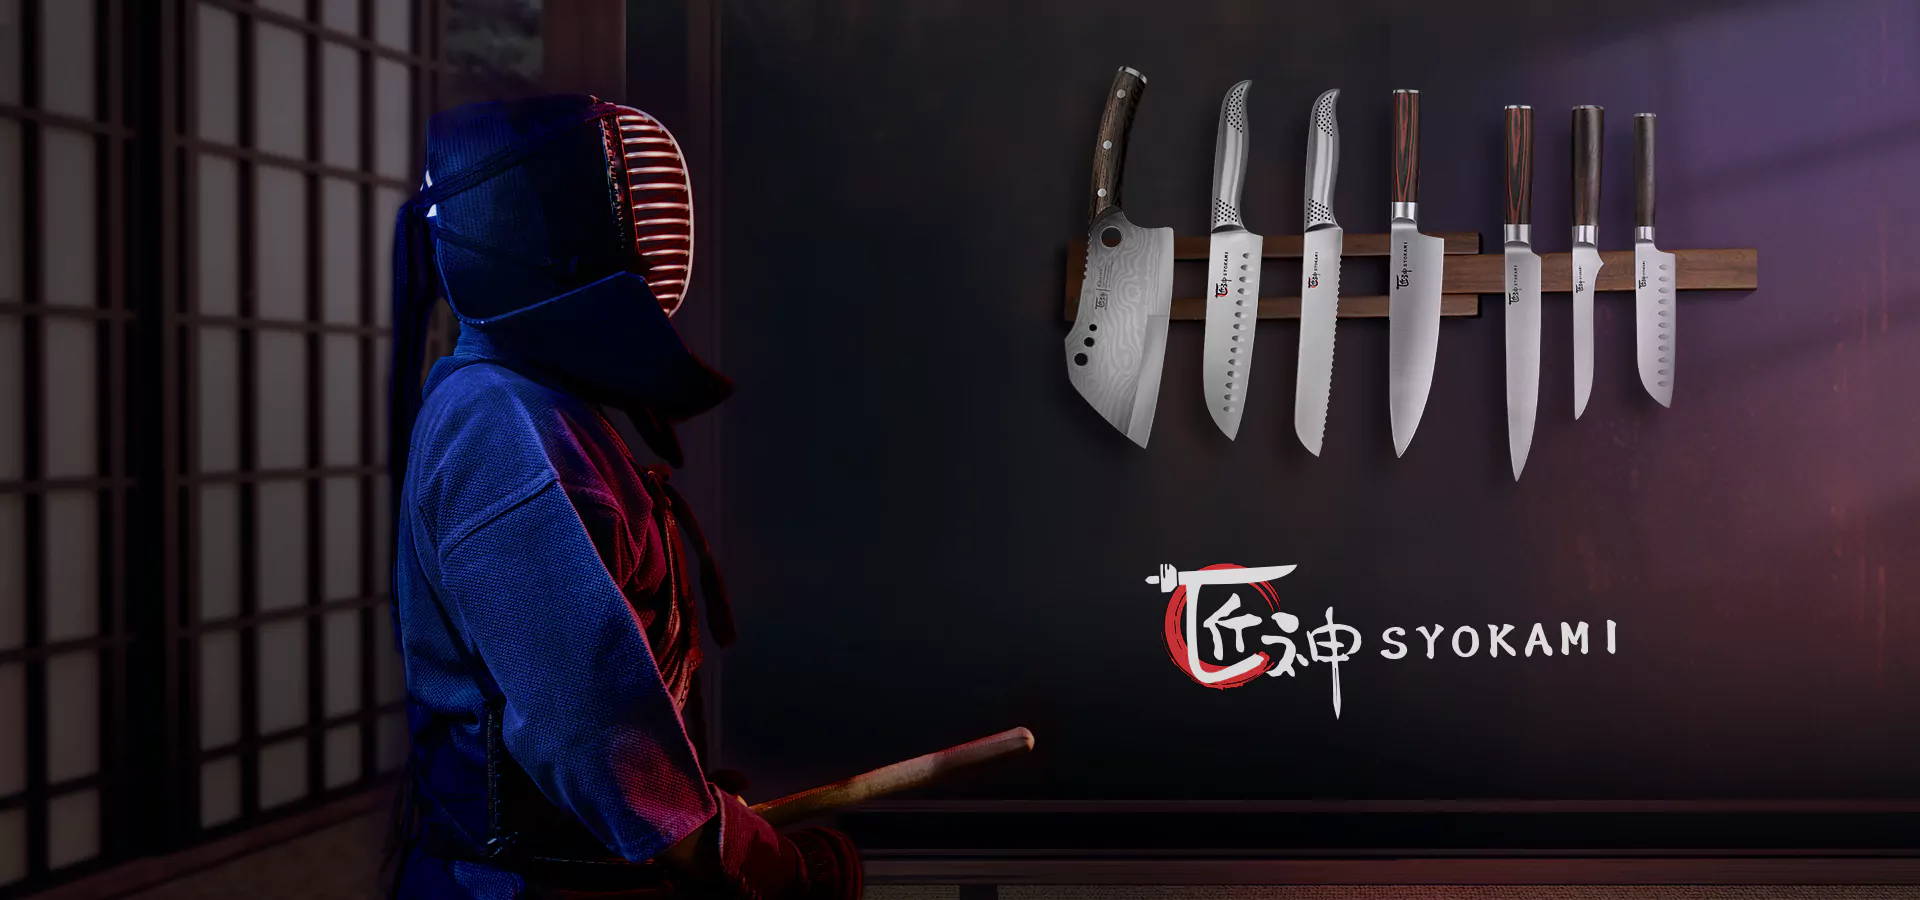 syokami kitchen knife-Japanese knives